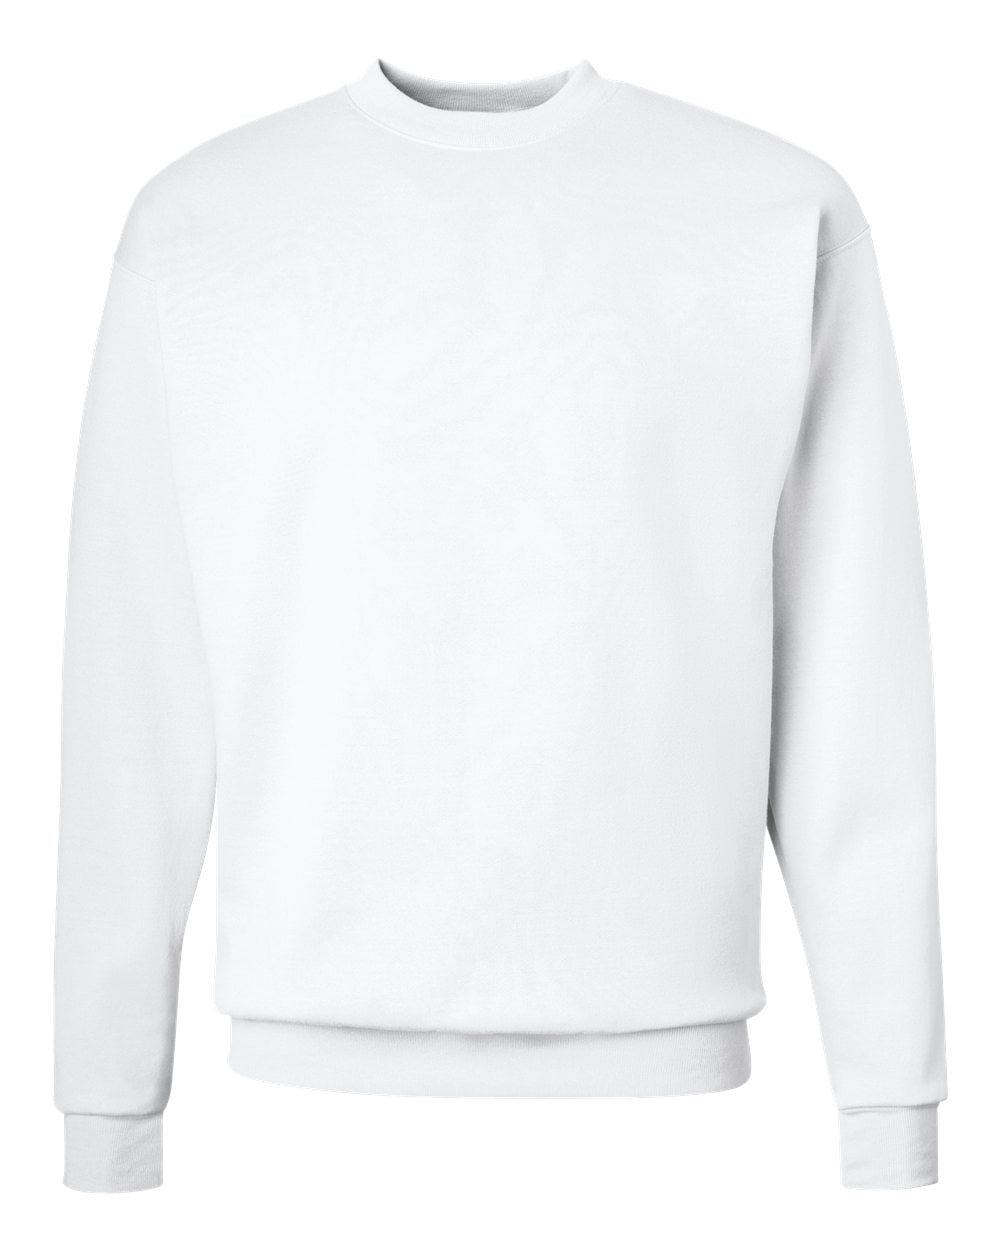 X-Large Hanes Adult 7.8 oz 50/50 Crewneck Sweatshirt in Cardinal 